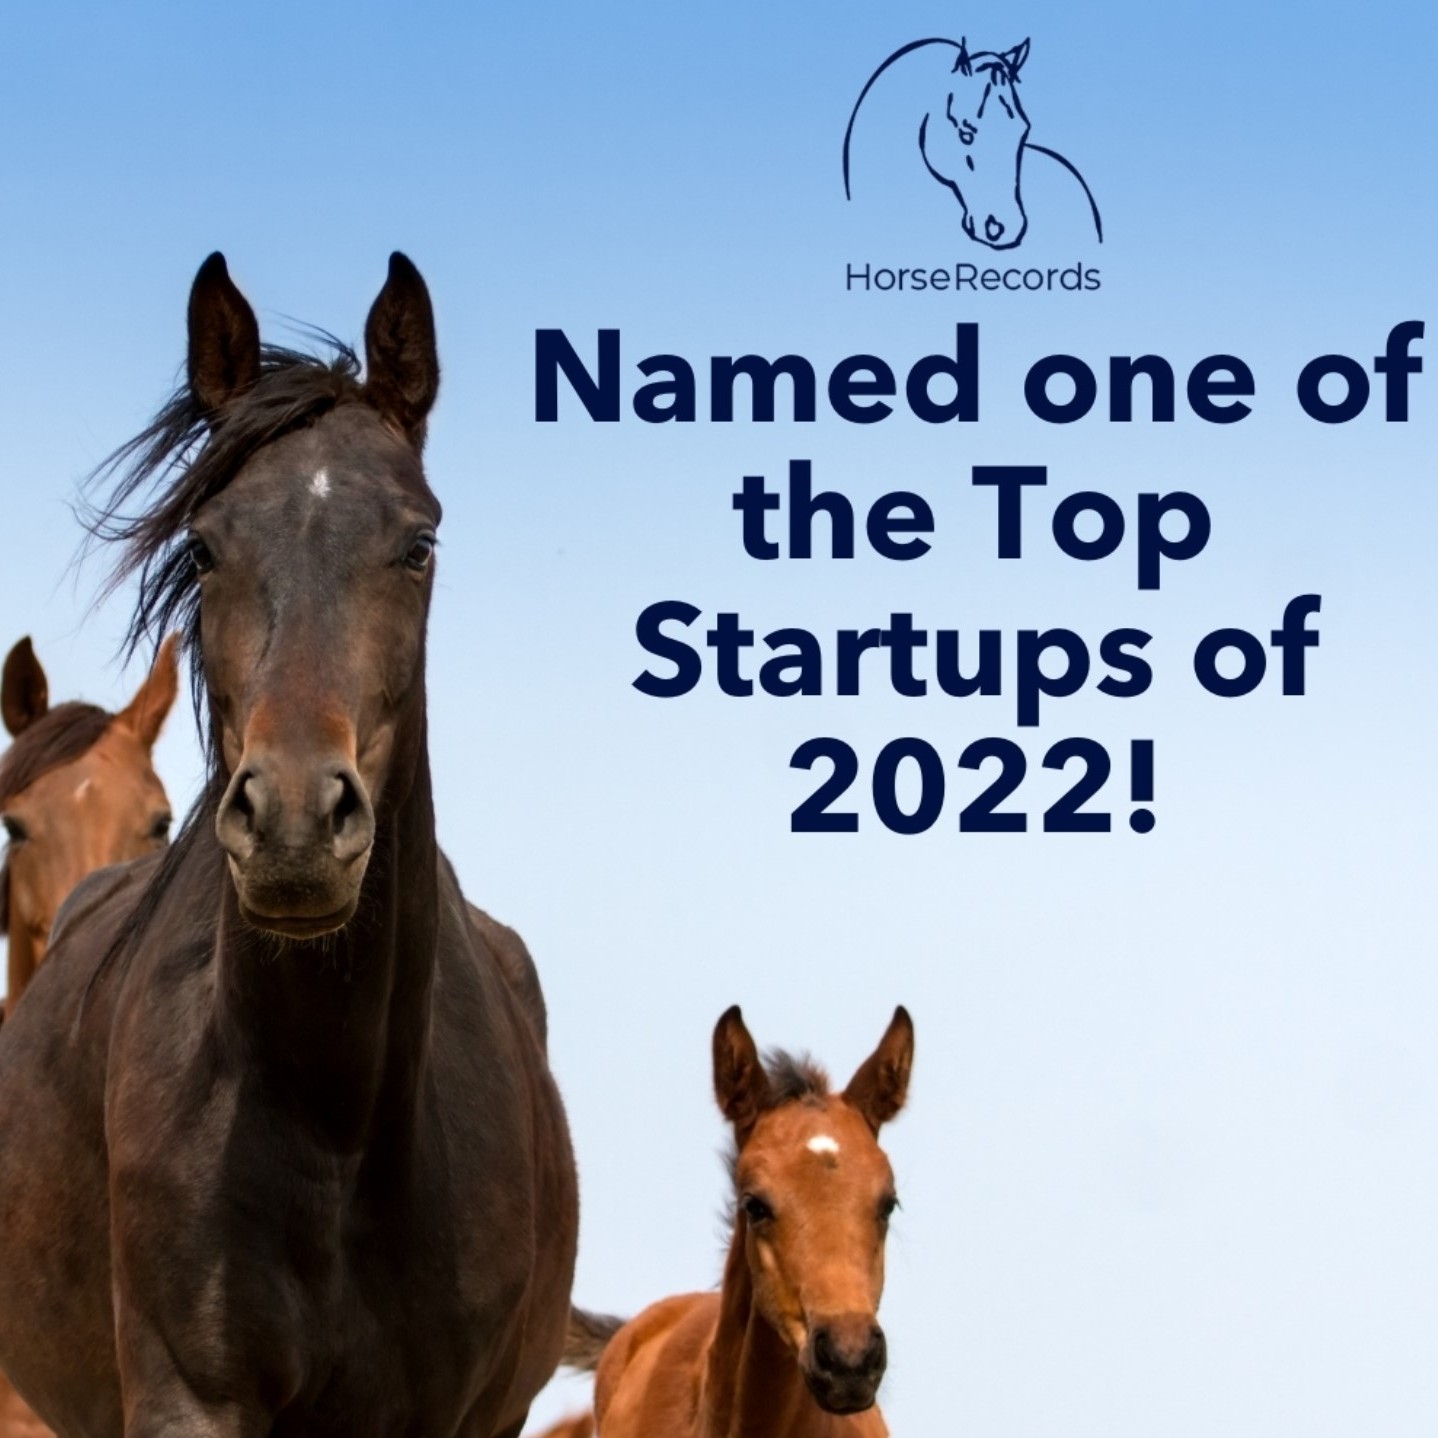 Top Startups of 2022